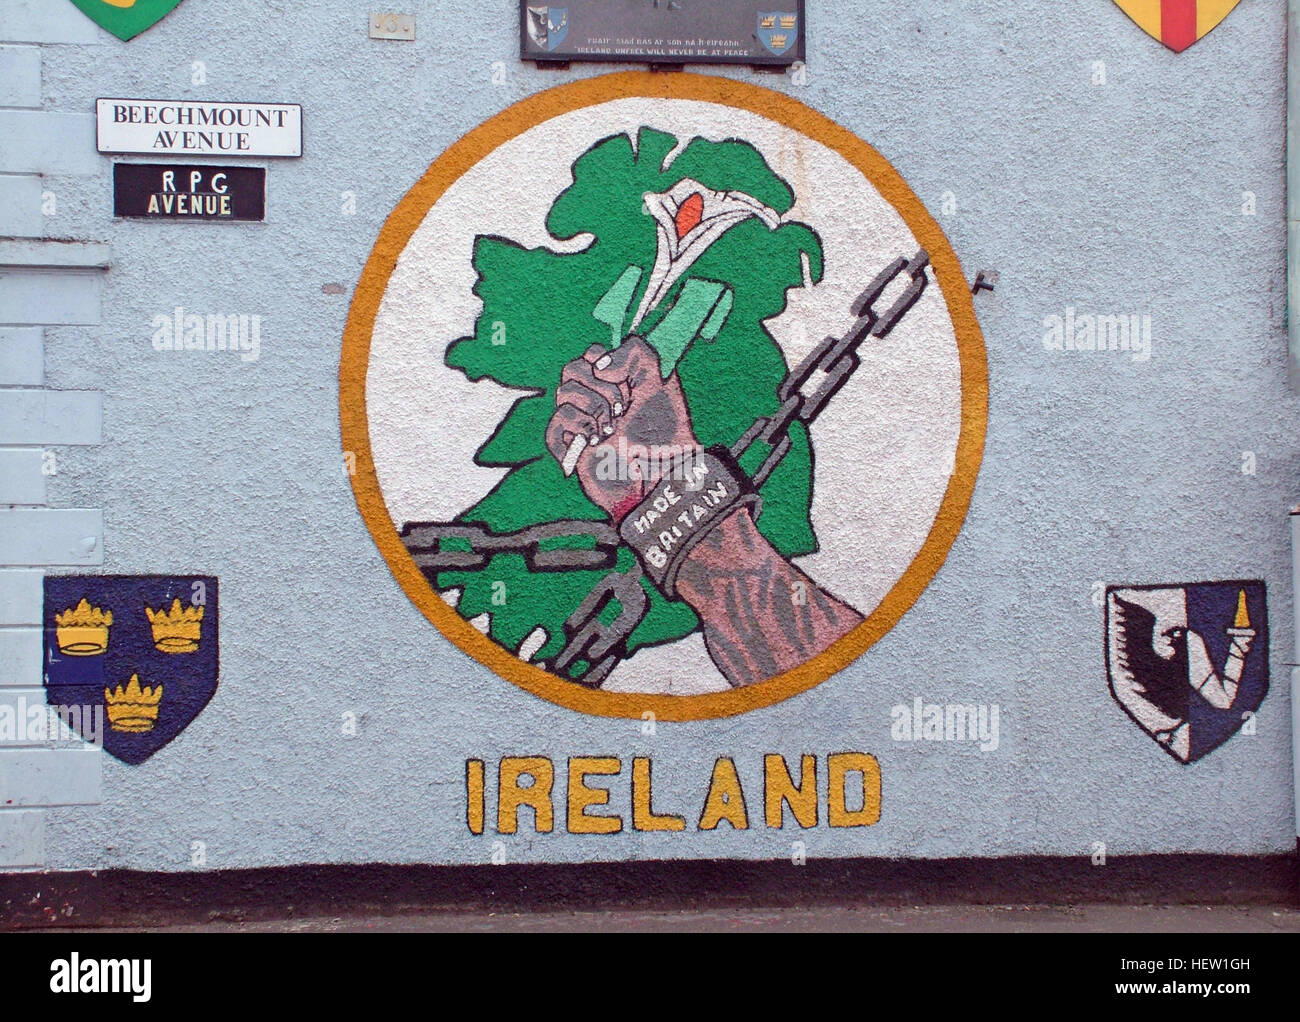 Belfast fällt Rd republikanischen Wandbild - Irlands Schmerzen gemacht in Großbritannien, RPG-Avenue - Beechmount detail Stockfoto